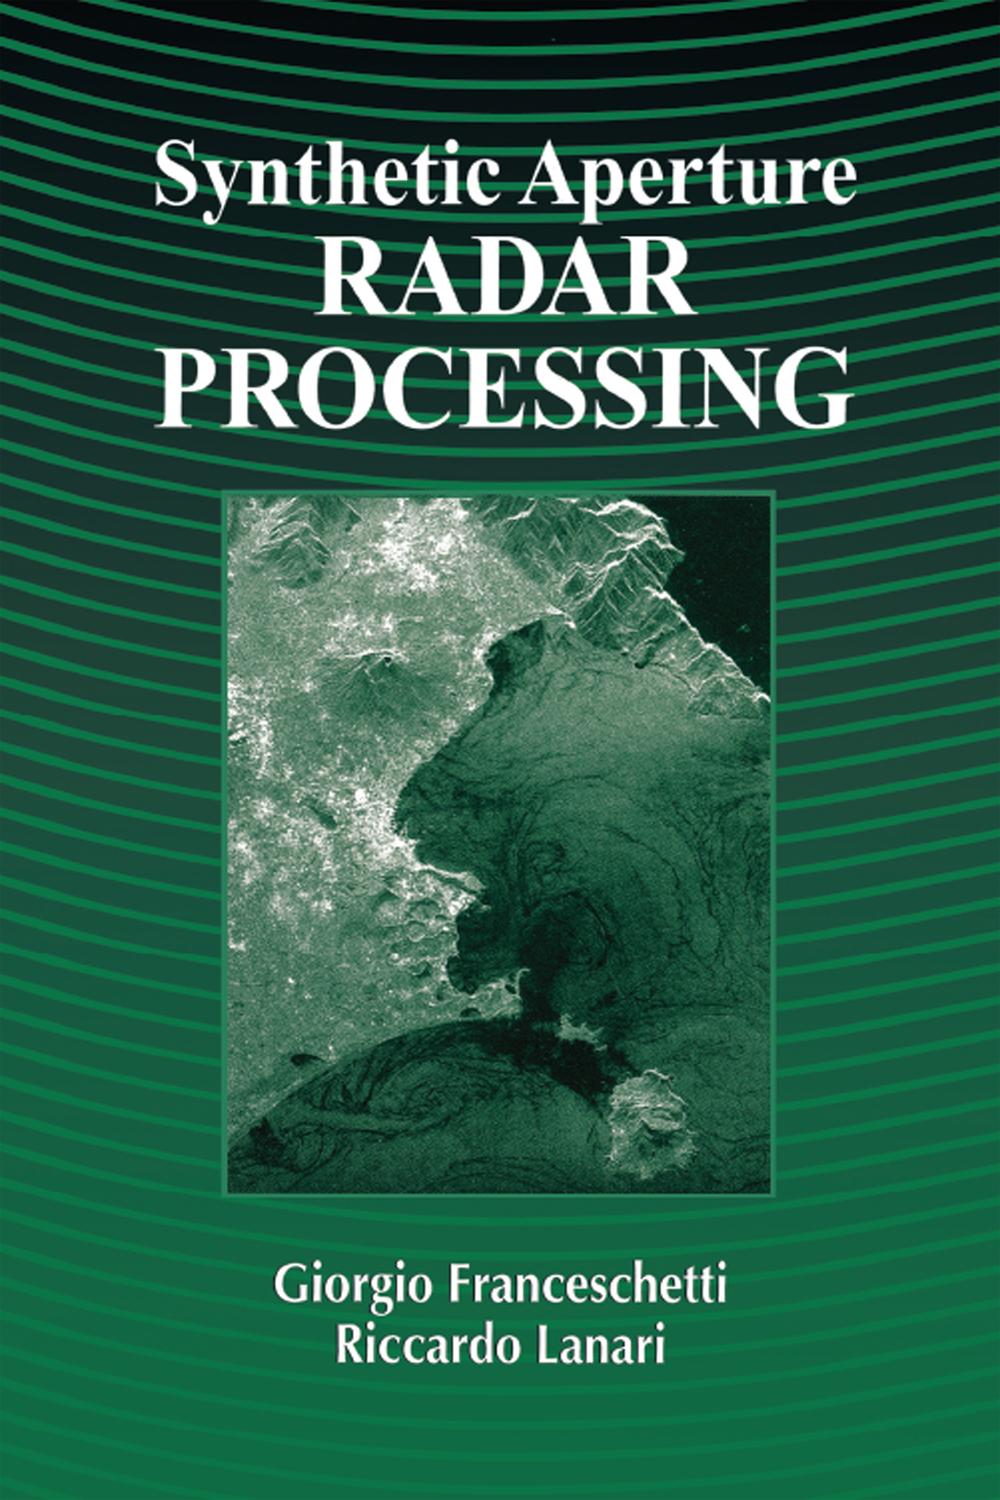 Synthetic Aperture Radar Processing - Giorgio Franceschetti, Riccardo Lanari, Giorgio Franceschetti, Riccardo Lanari,,